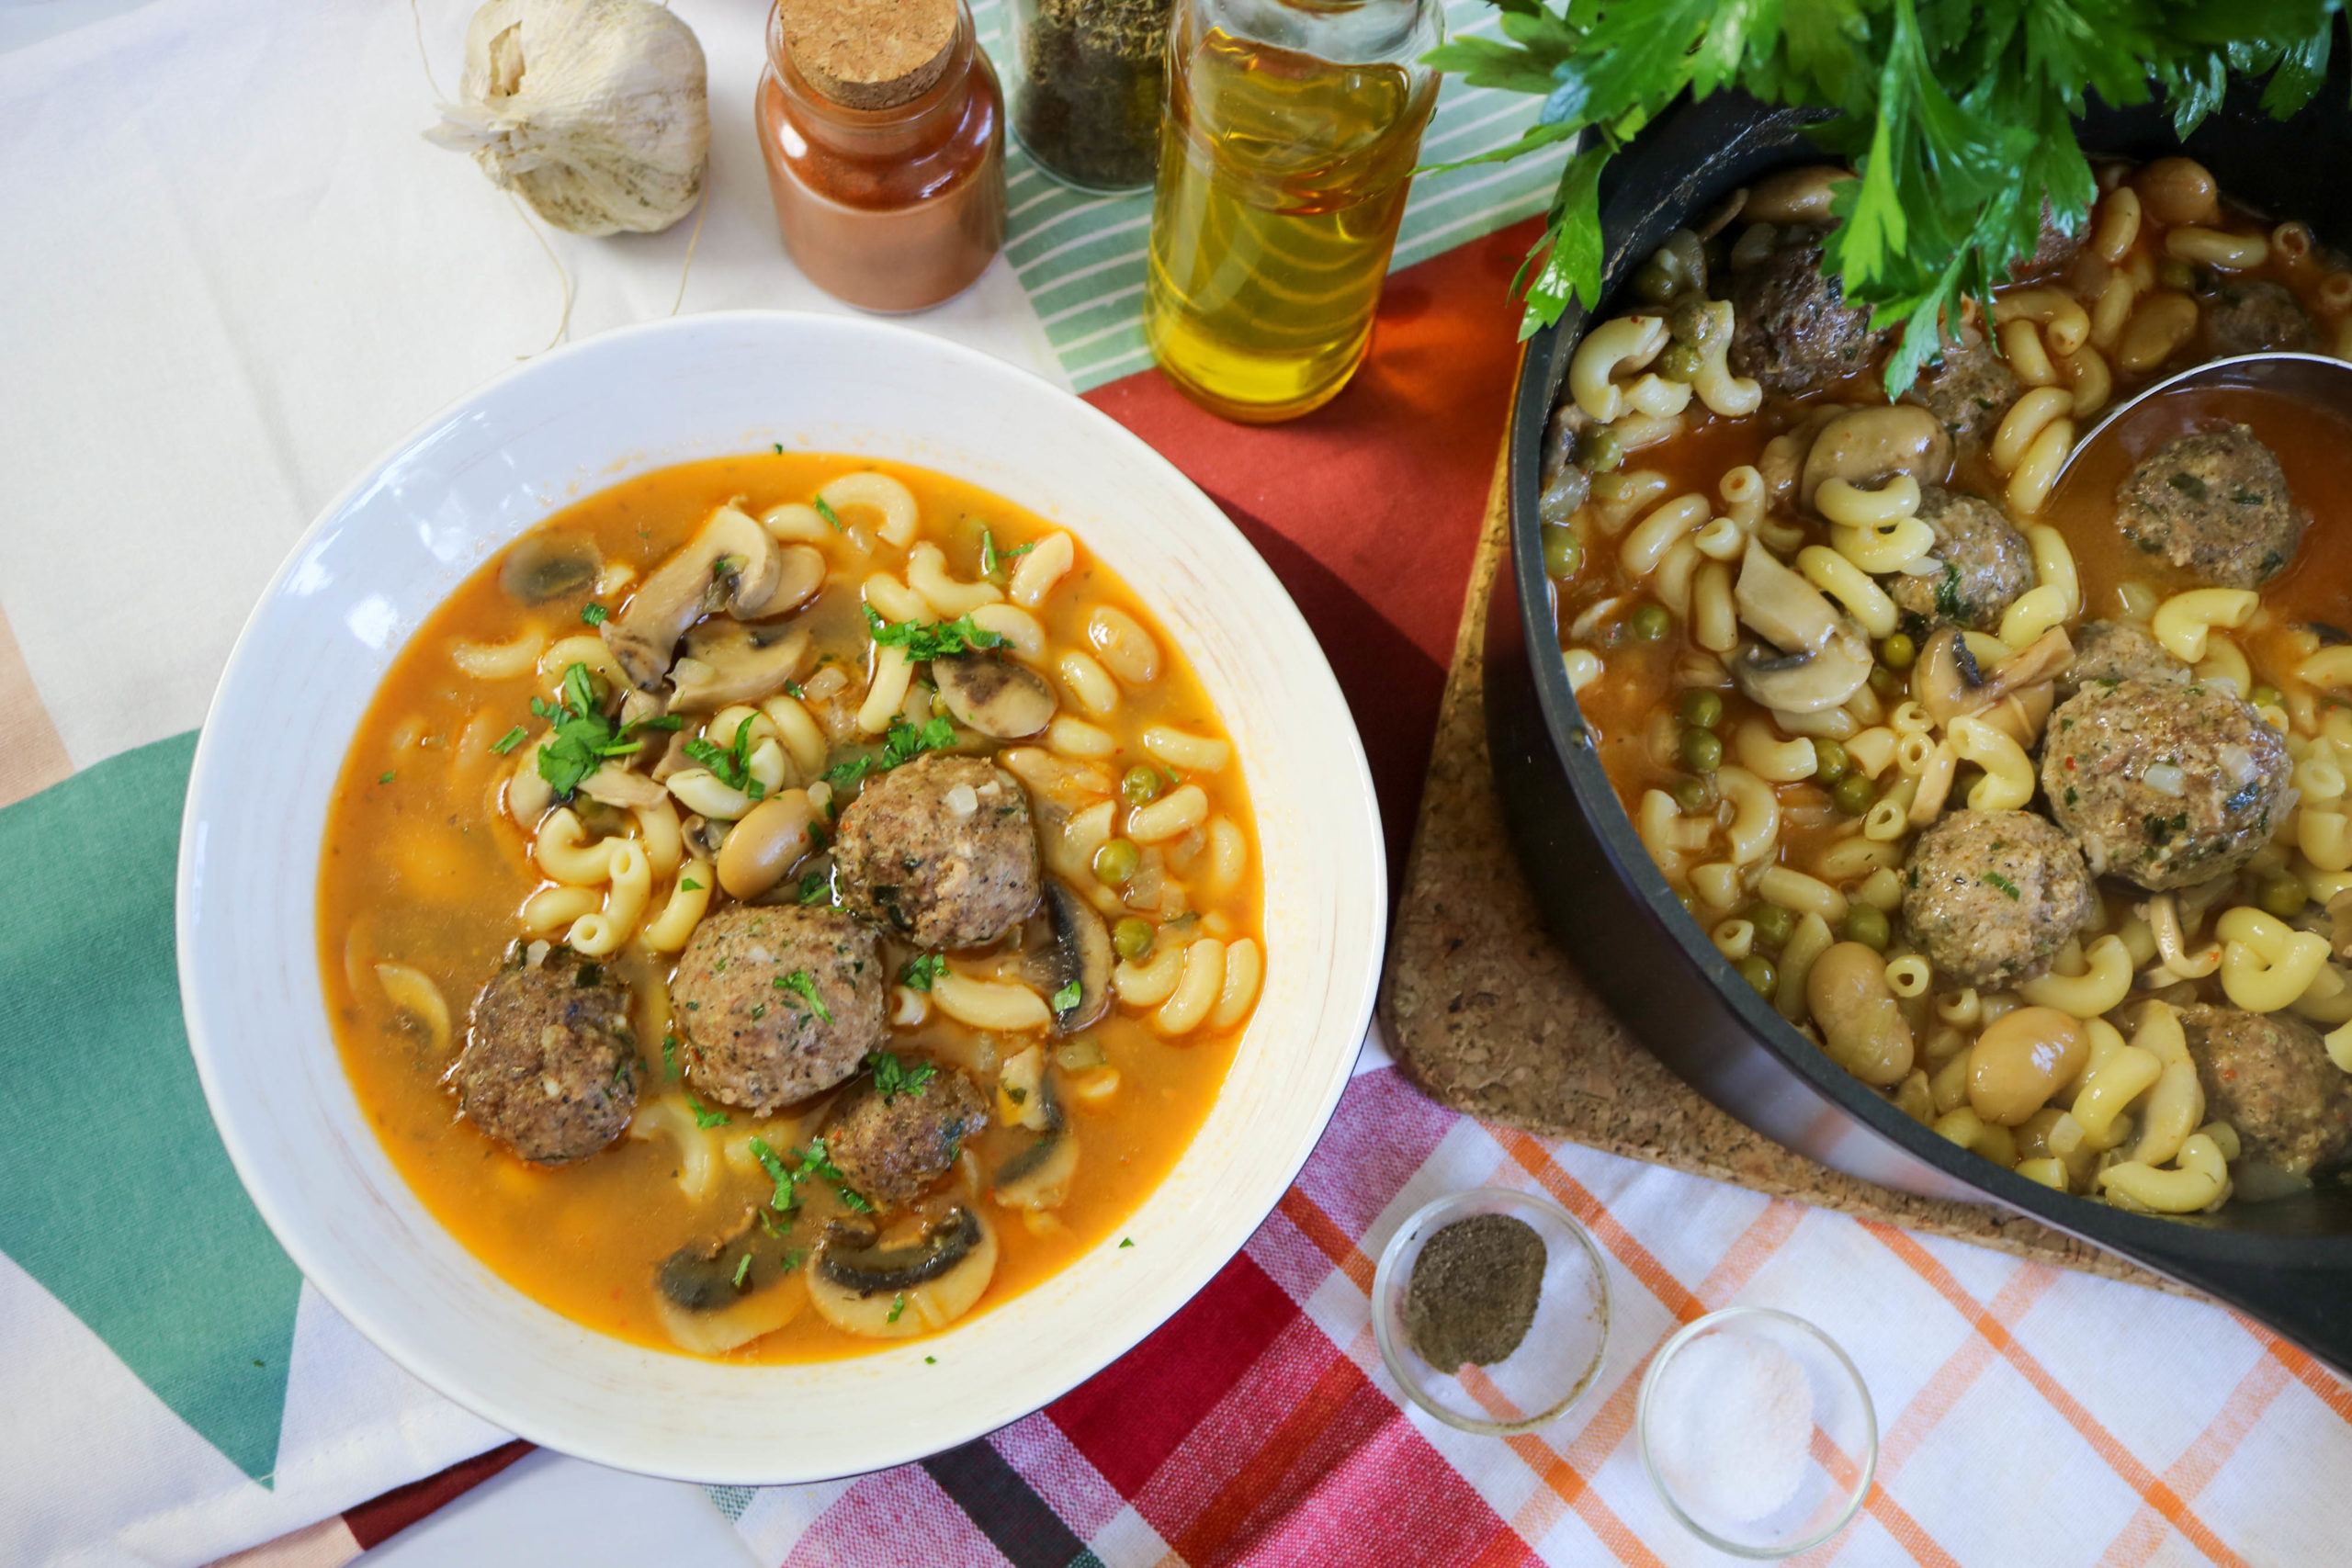 Italian Meatball Stew